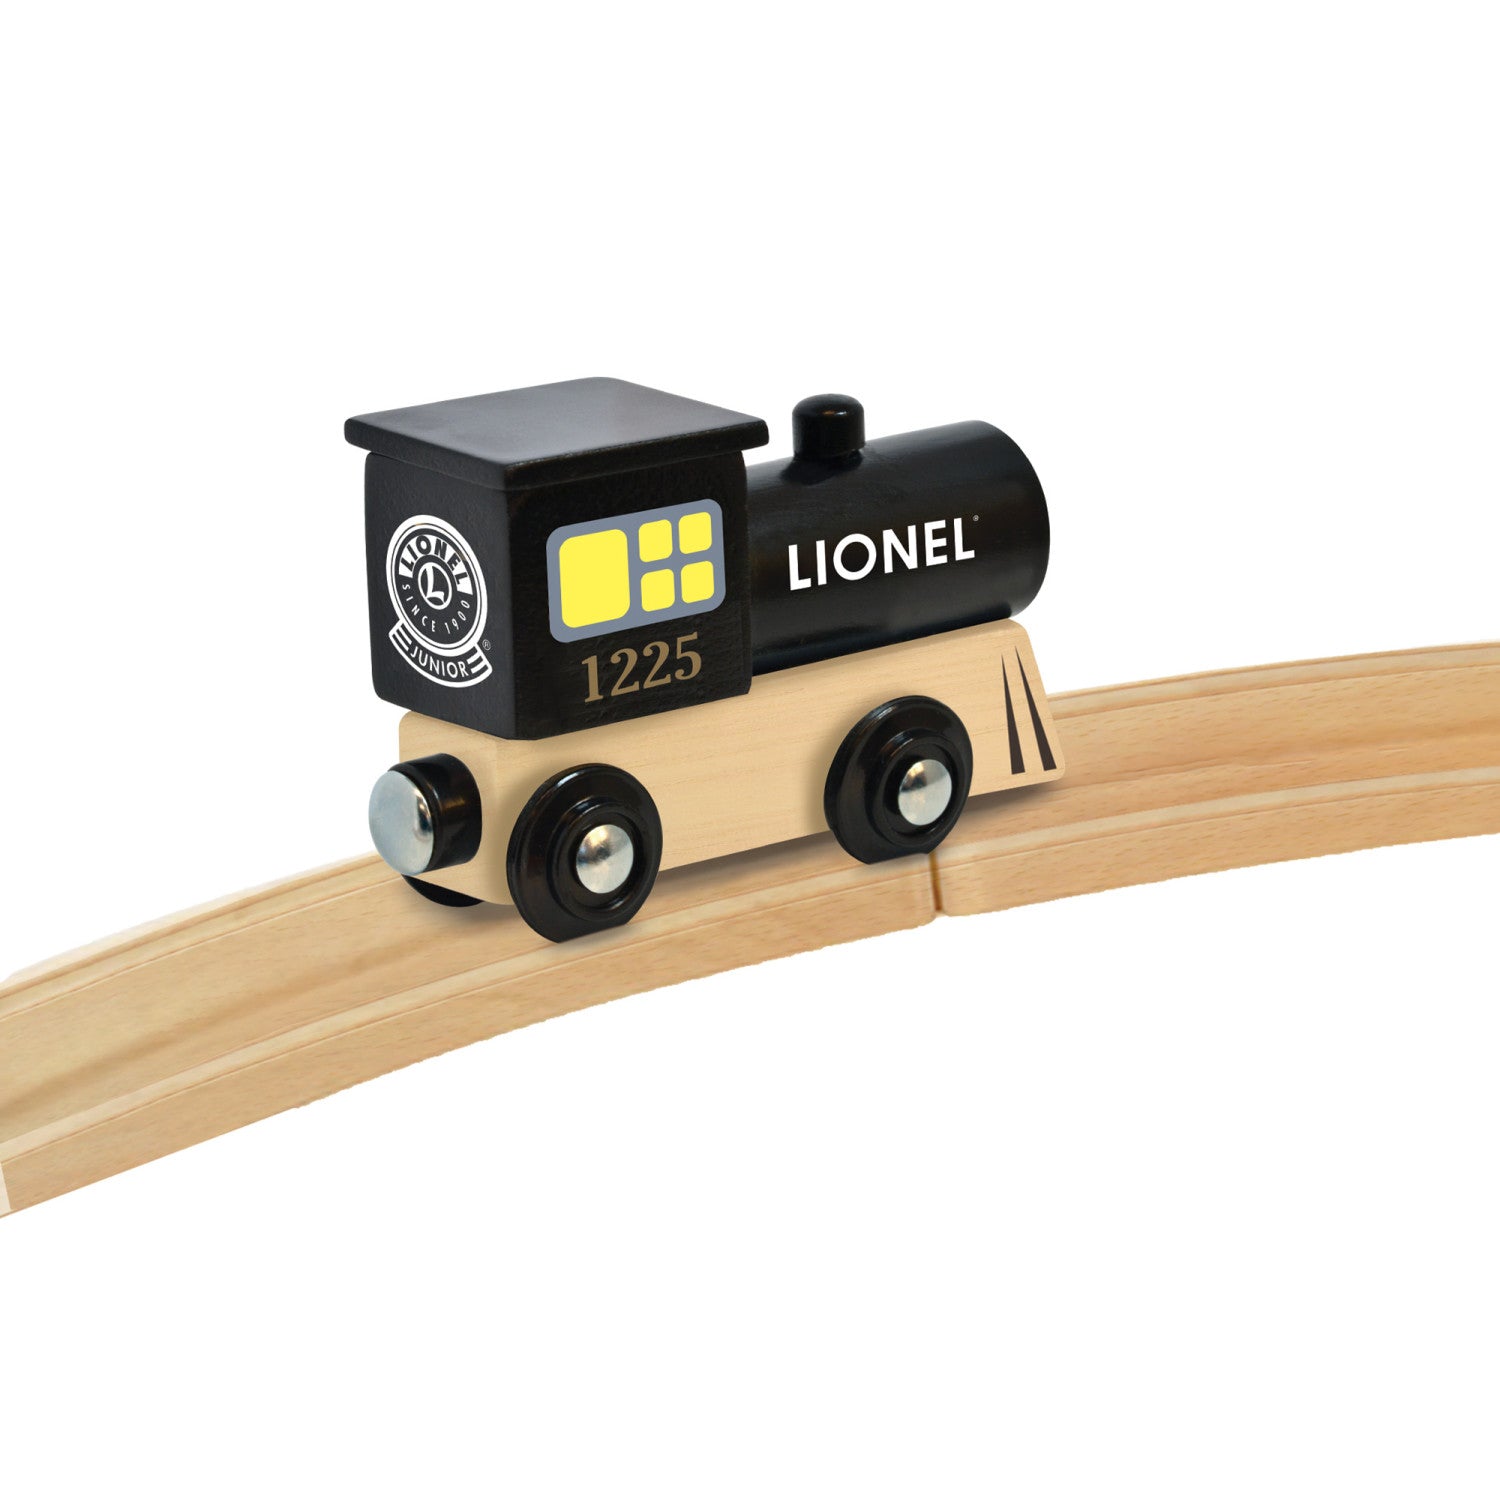 Lionel Wood Toy Train Engine